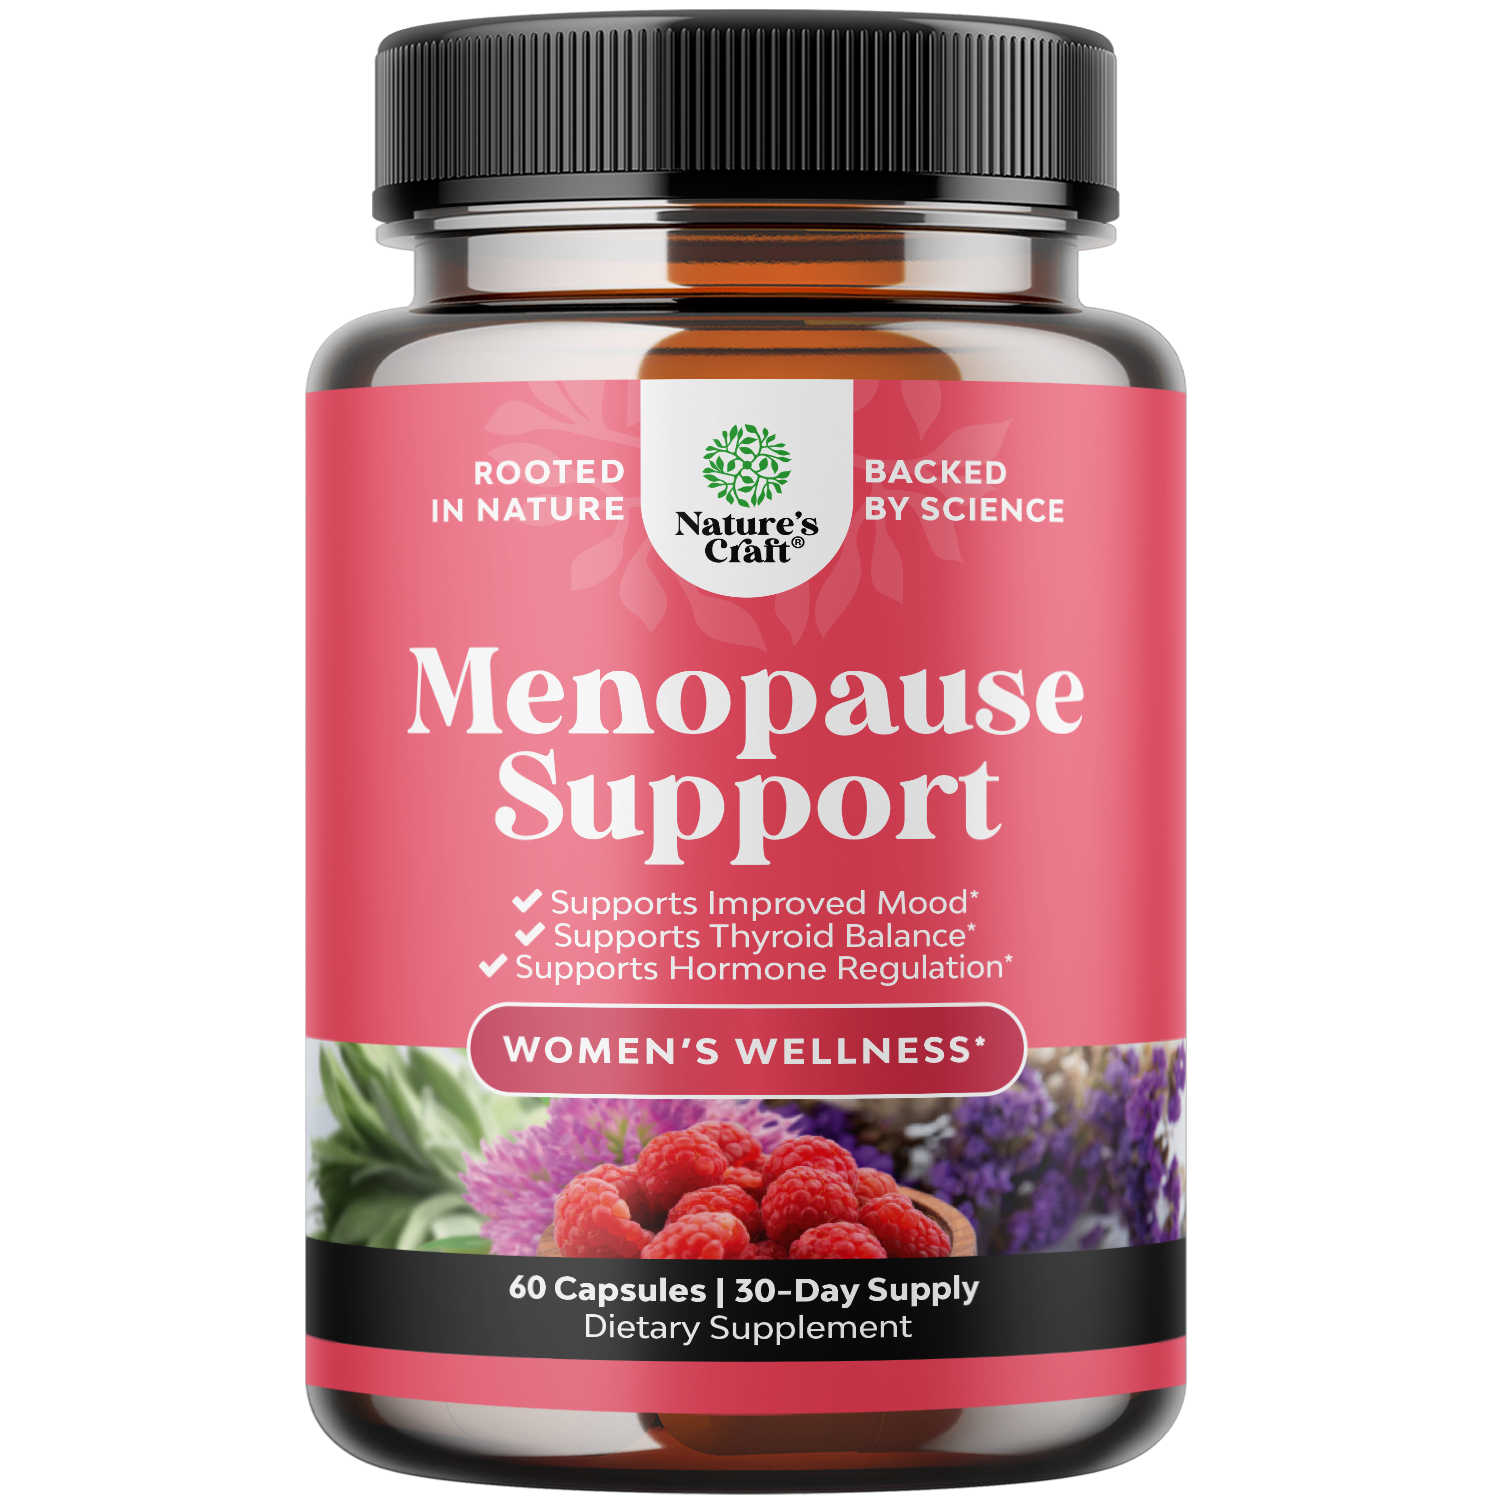 Menopause Support - 60 Capsules